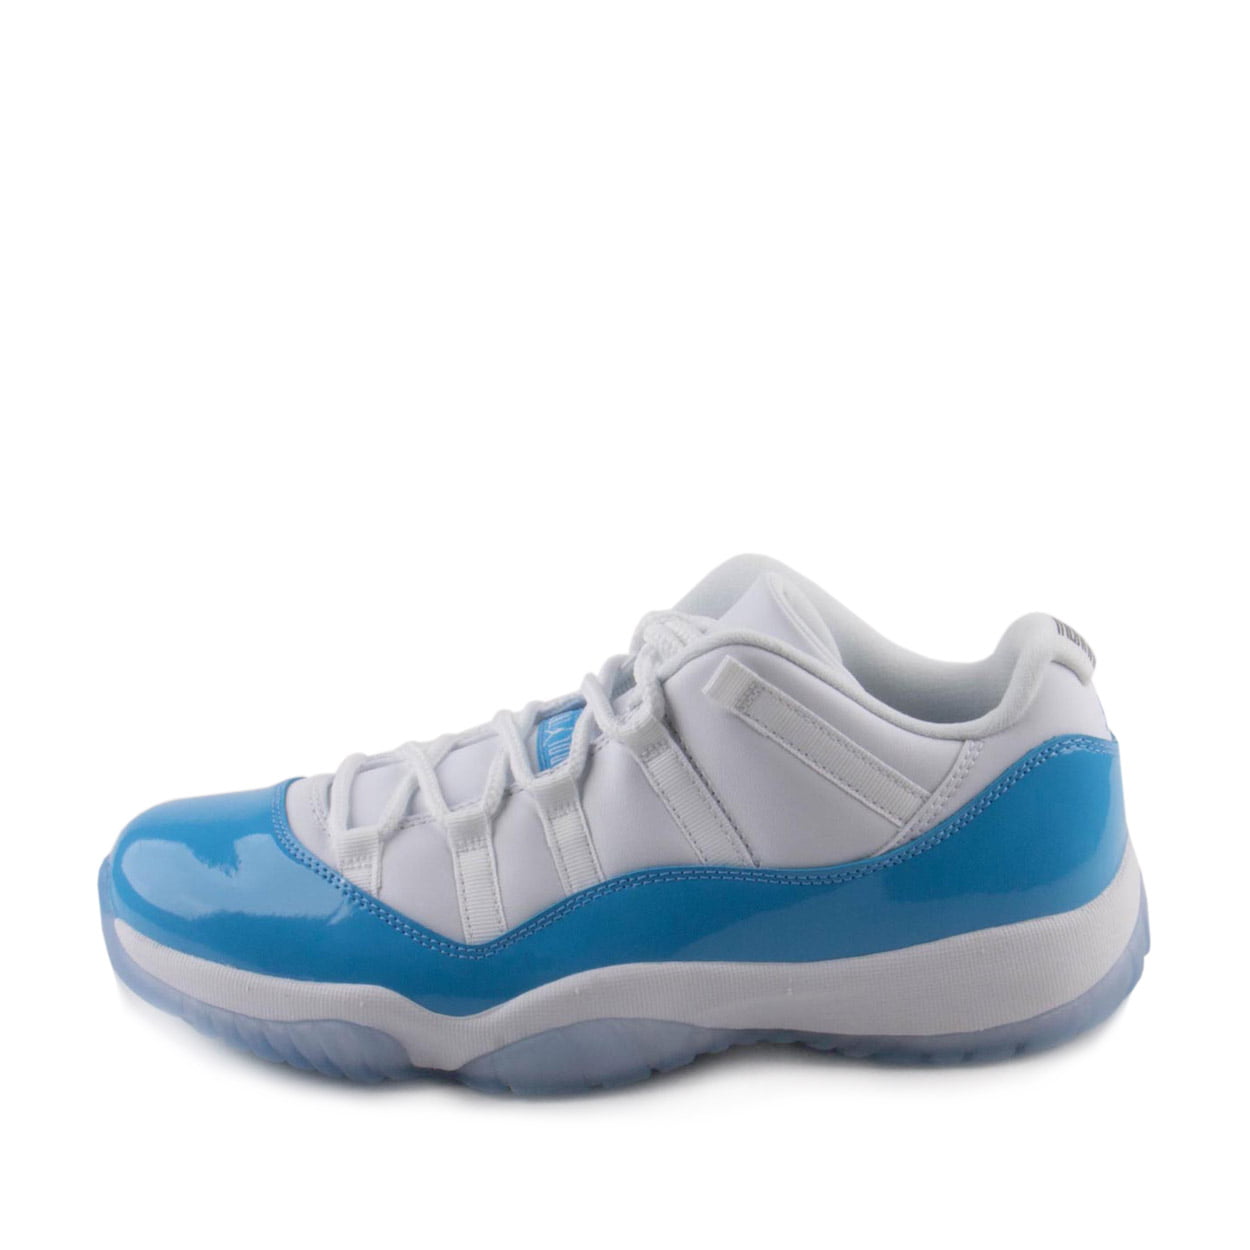 Nike Mens Air Jordan 11 Retro Low White/University Blue 528895-106